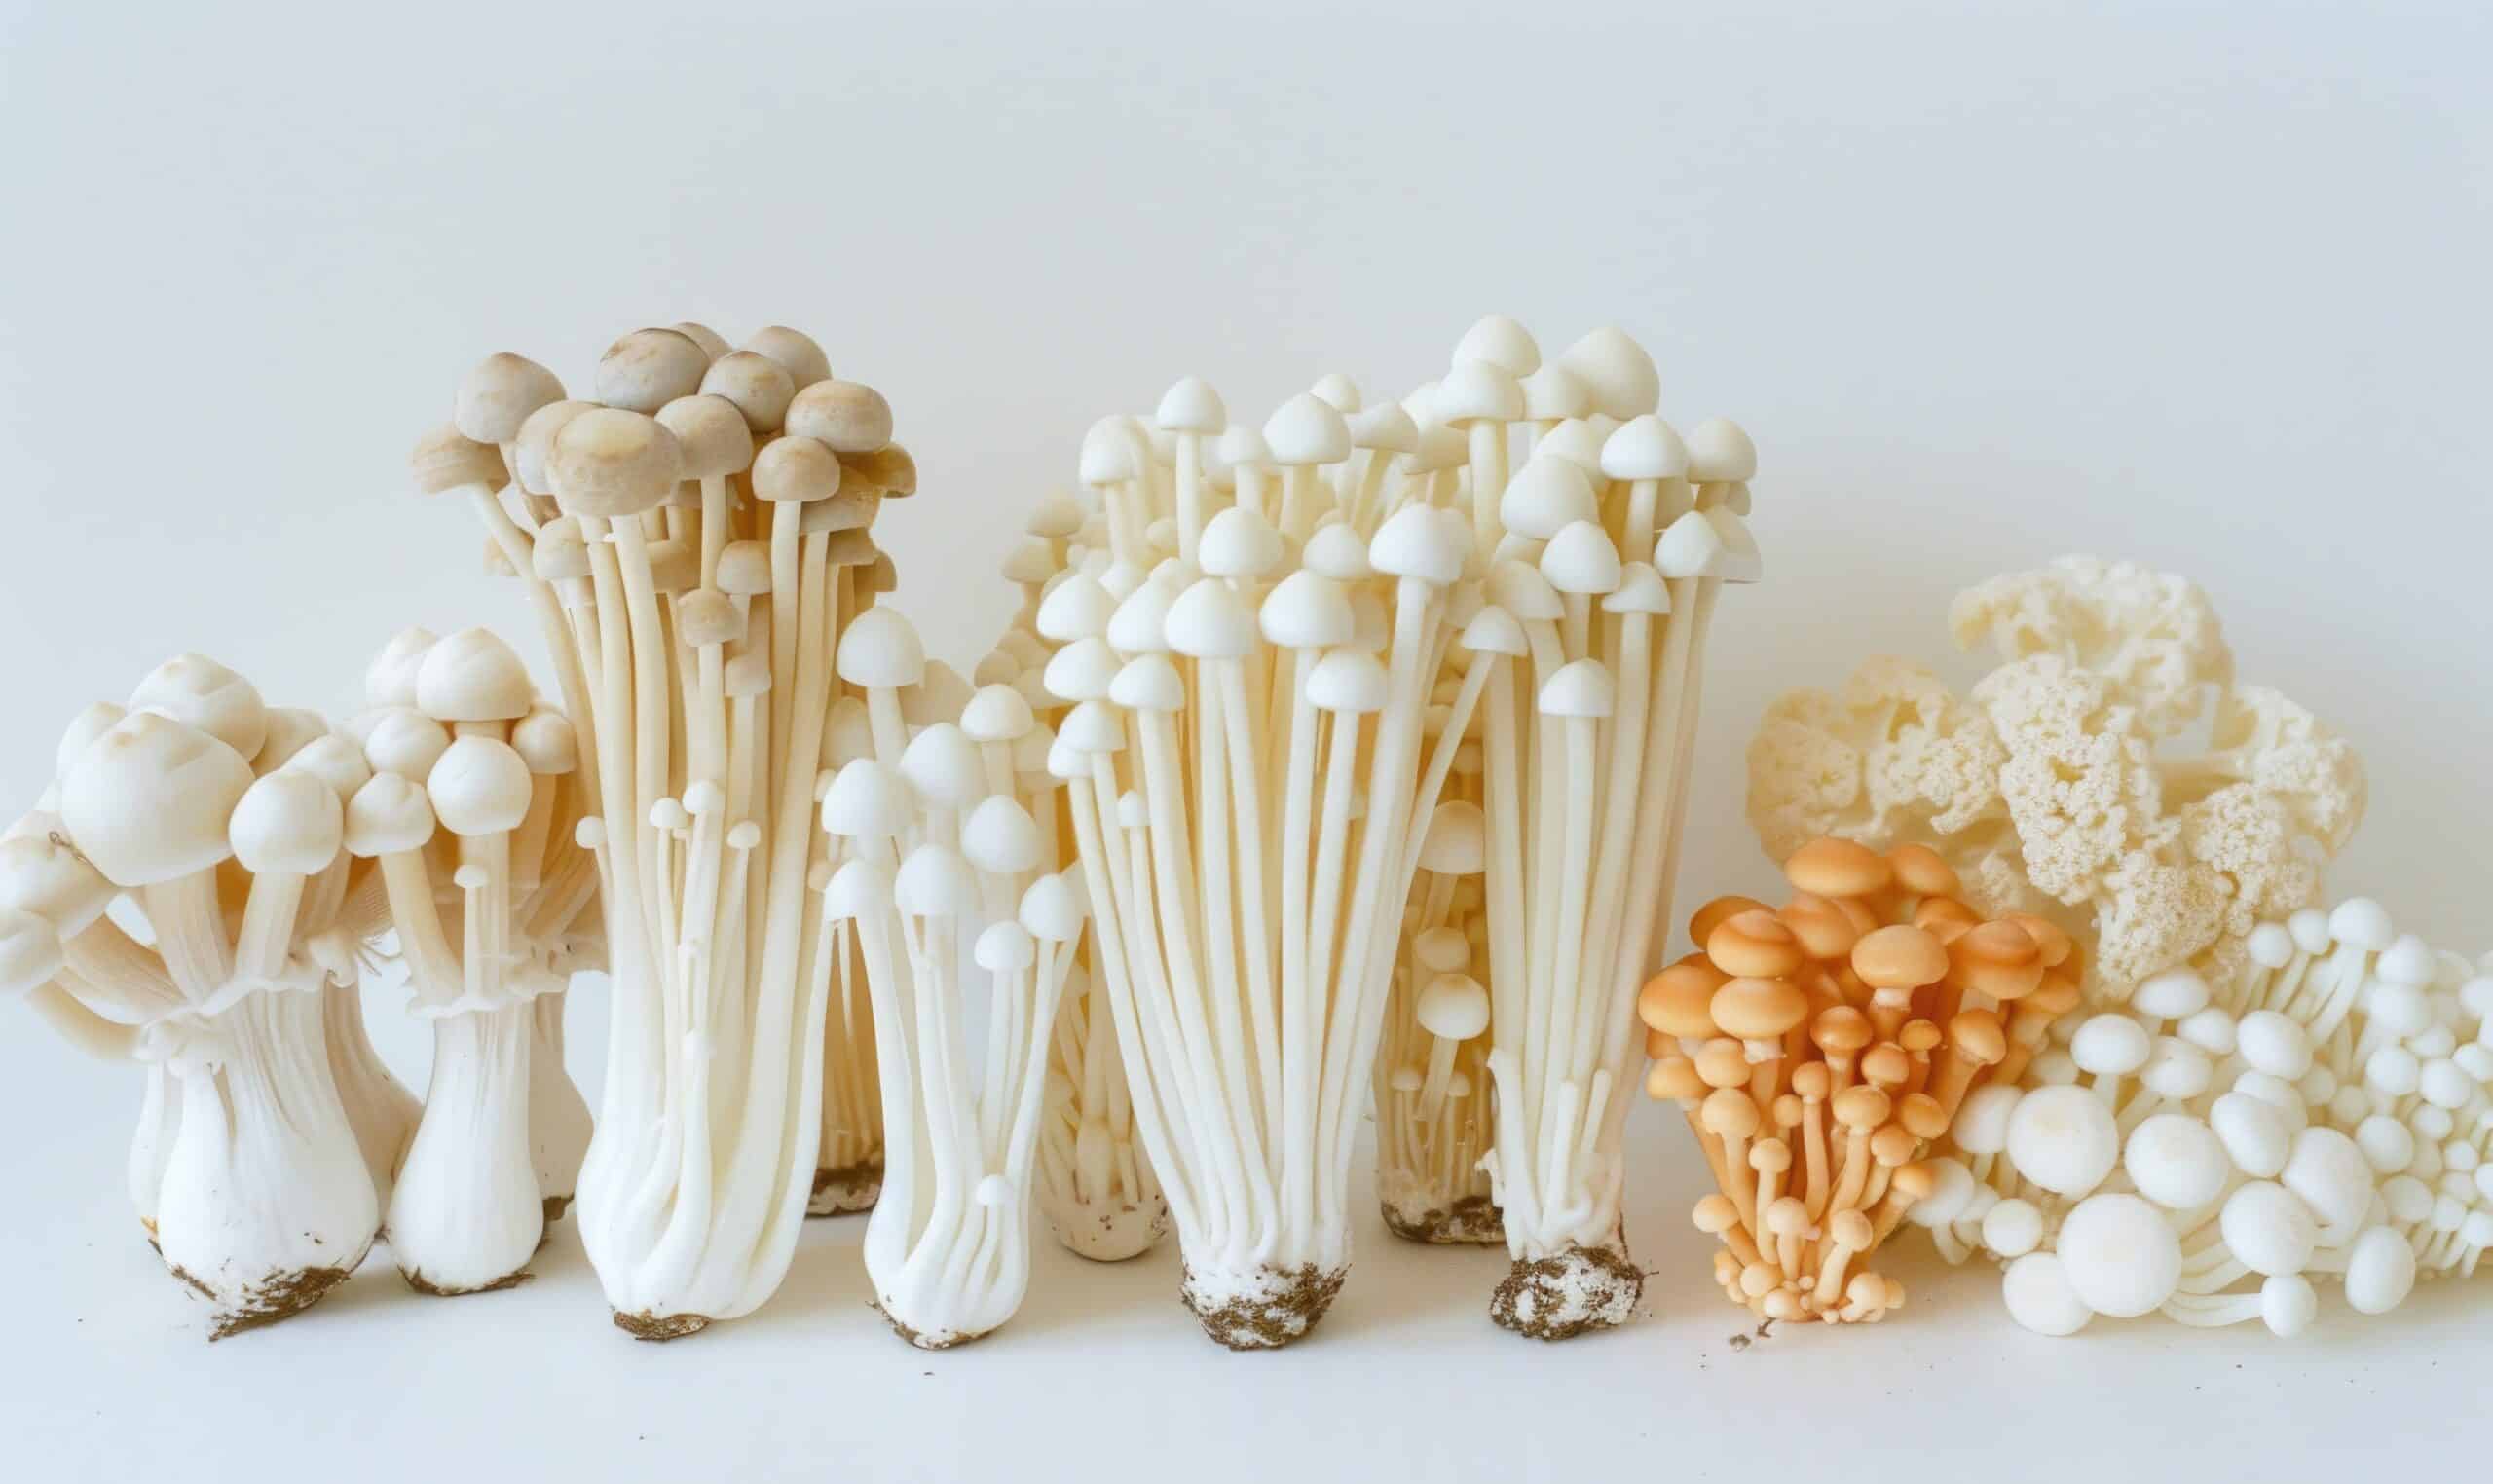 growmyownhealthfood.com : Can dried mushrooms be used to grow new ones?